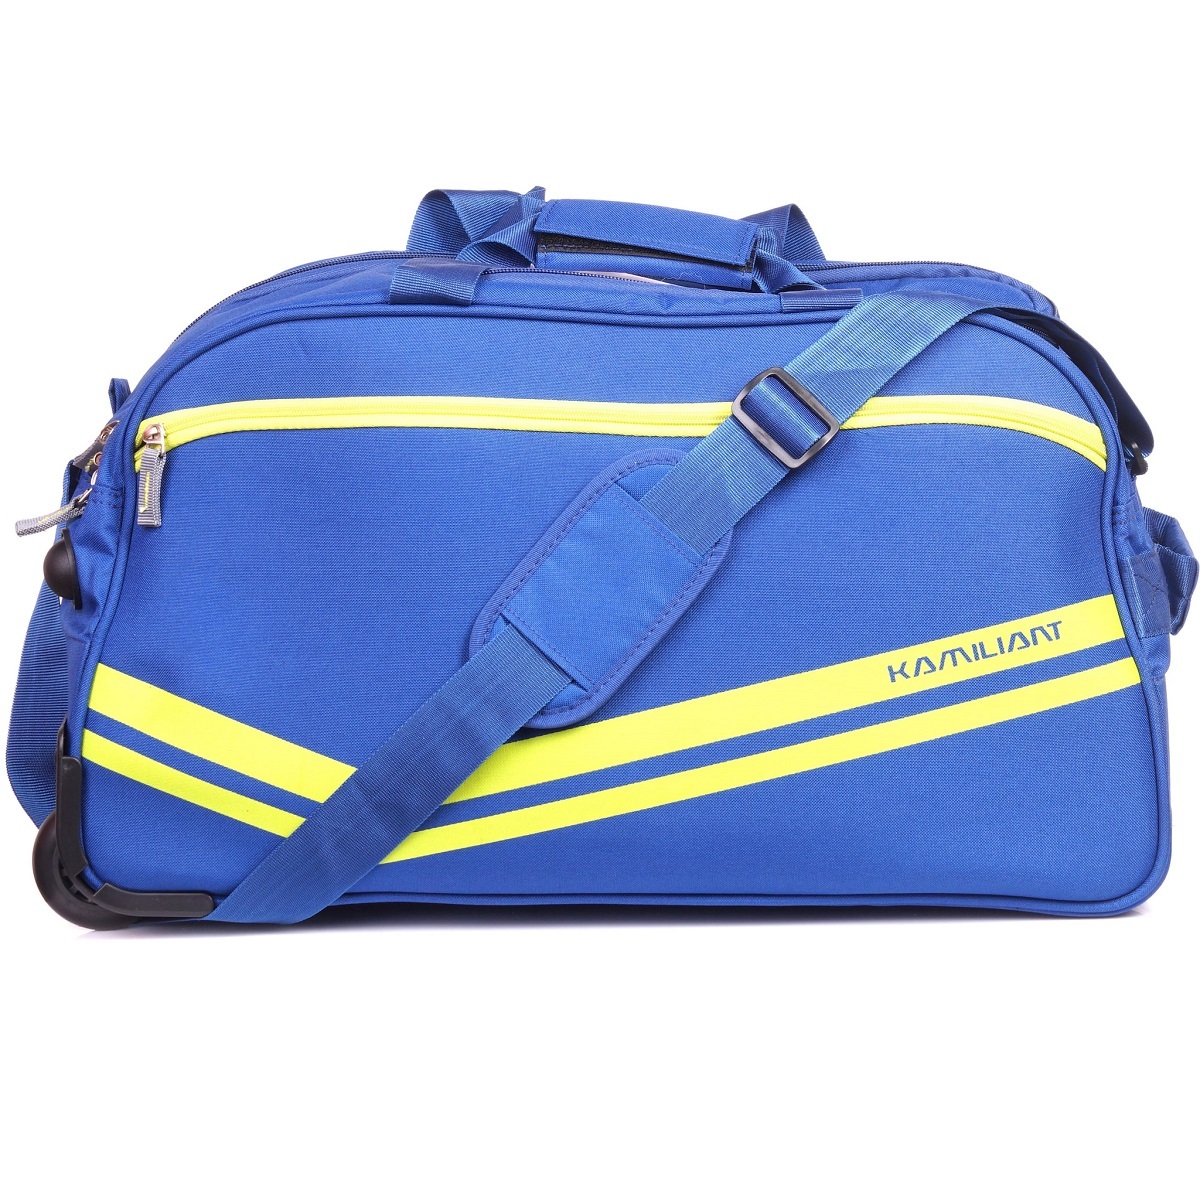 Kamiliant Wheeled Duffled Bag Zoro 52cm Blue